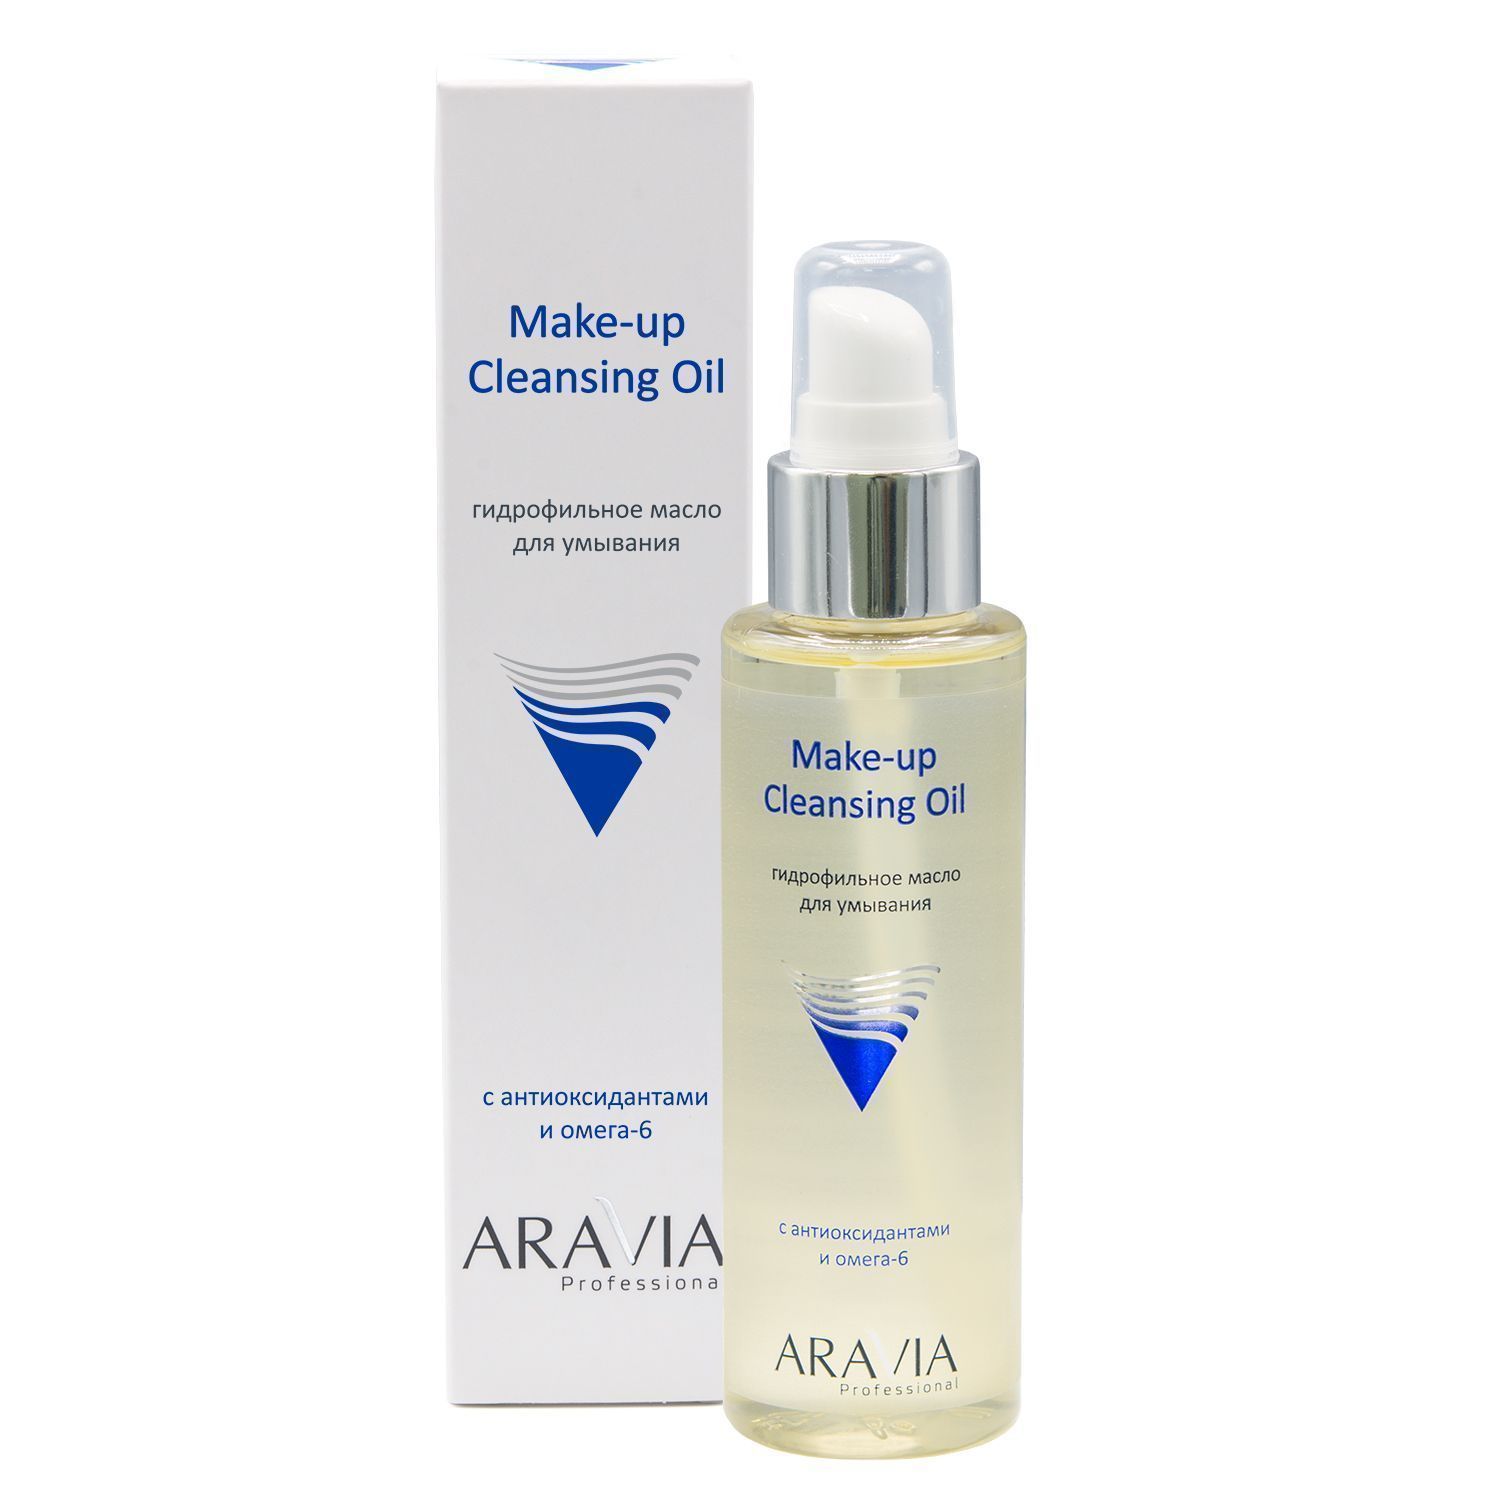 Aravia Professional Гидрофильное масло для умывания с антиоксидантами и омега-6 Make-up Cleansing Oil, 110 мл